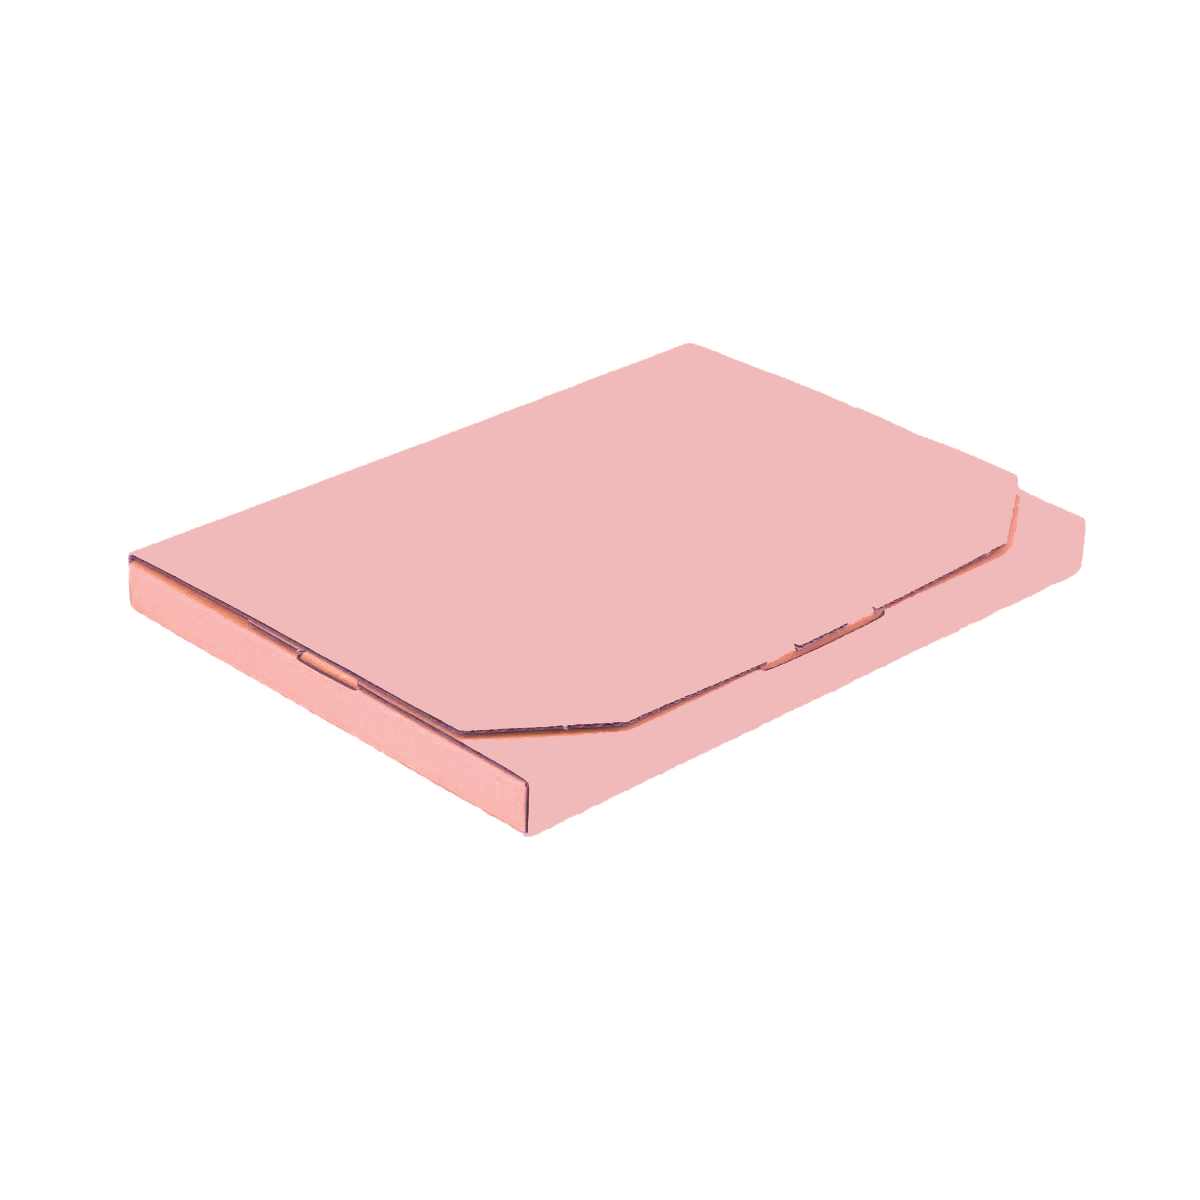 310 x 220 x 16mm A4 Superflat Rose Pink Mailing Box B448 - eBPak